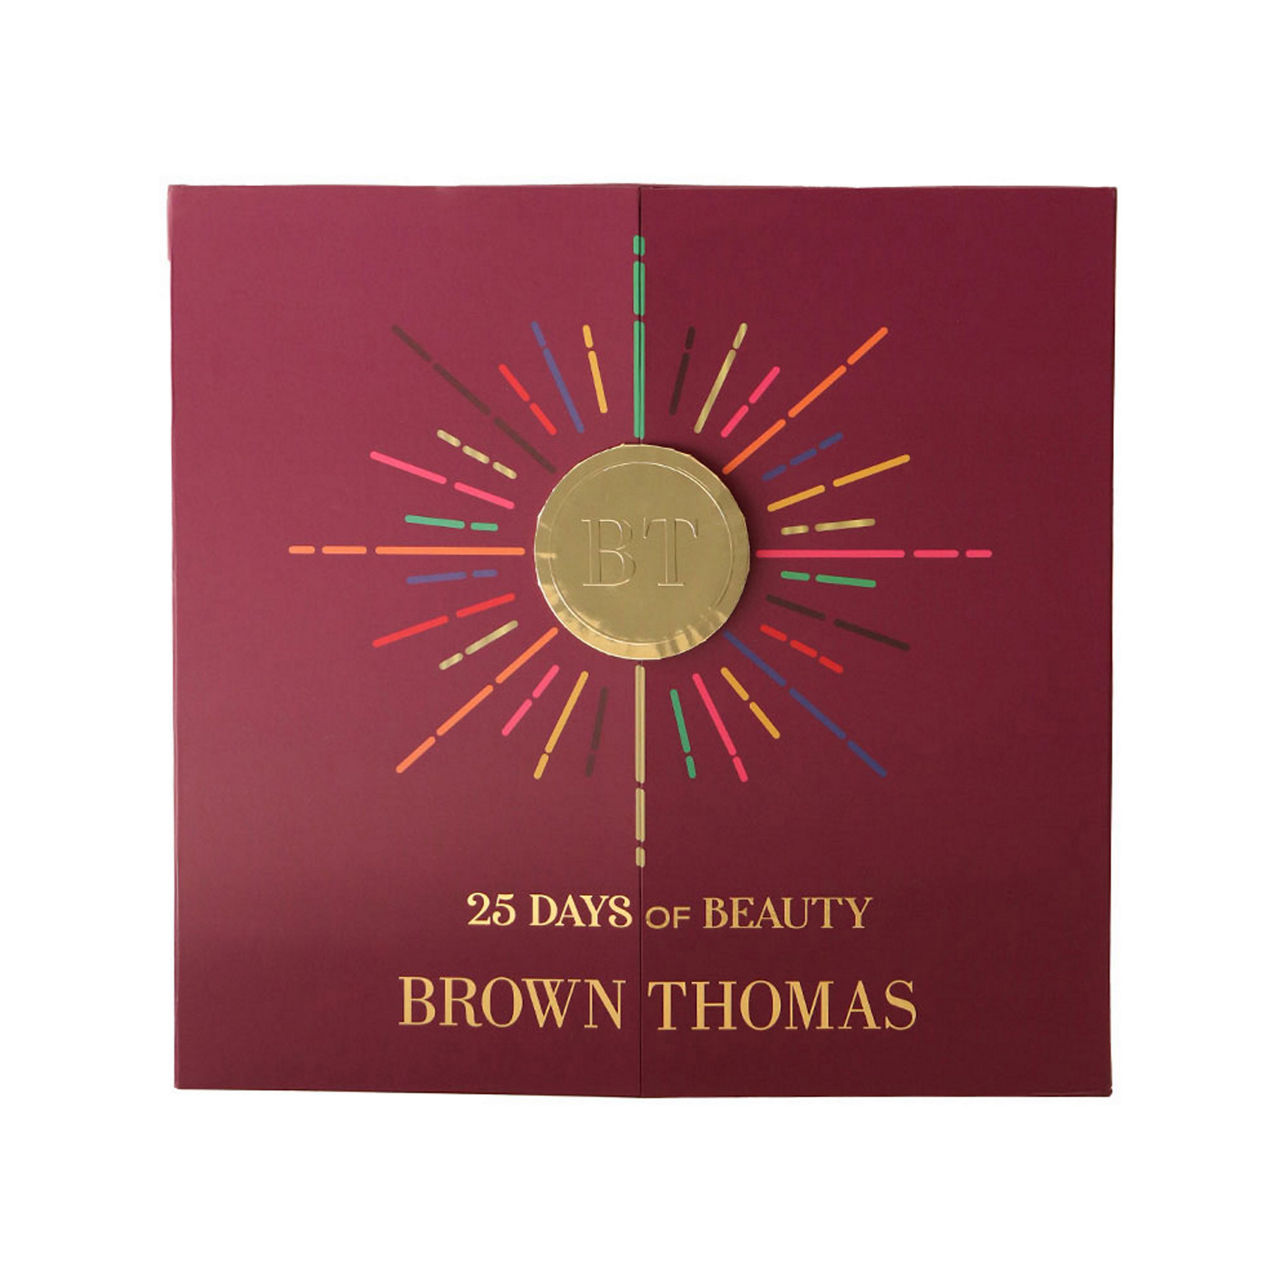 Brown Thomas on X: Fine Italian Design. Step inside the new